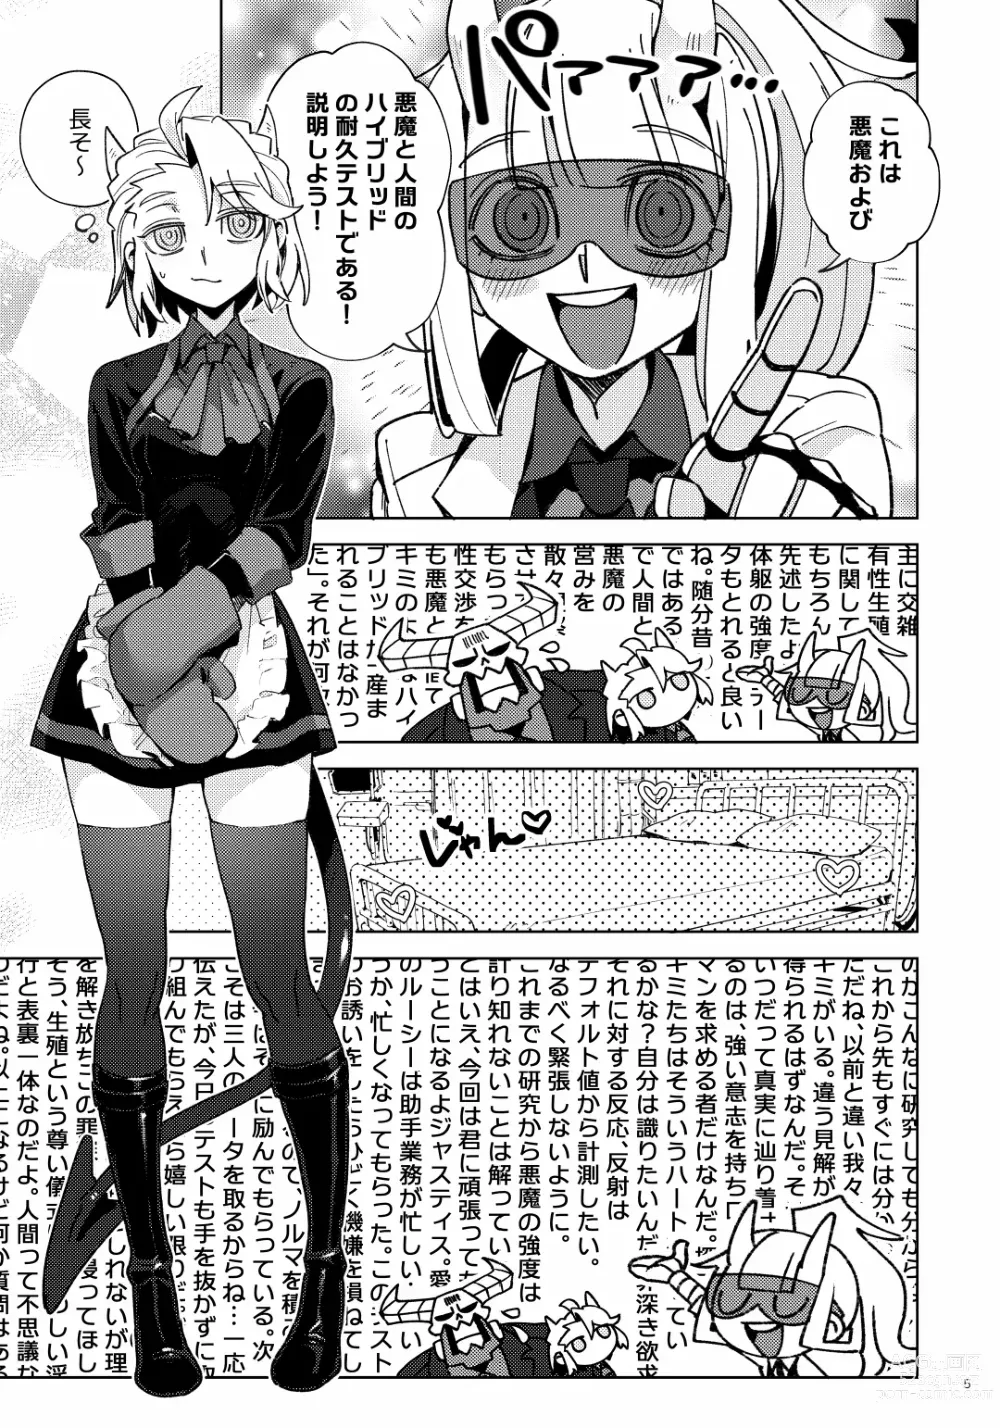 Page 4 of doujinshi Re: